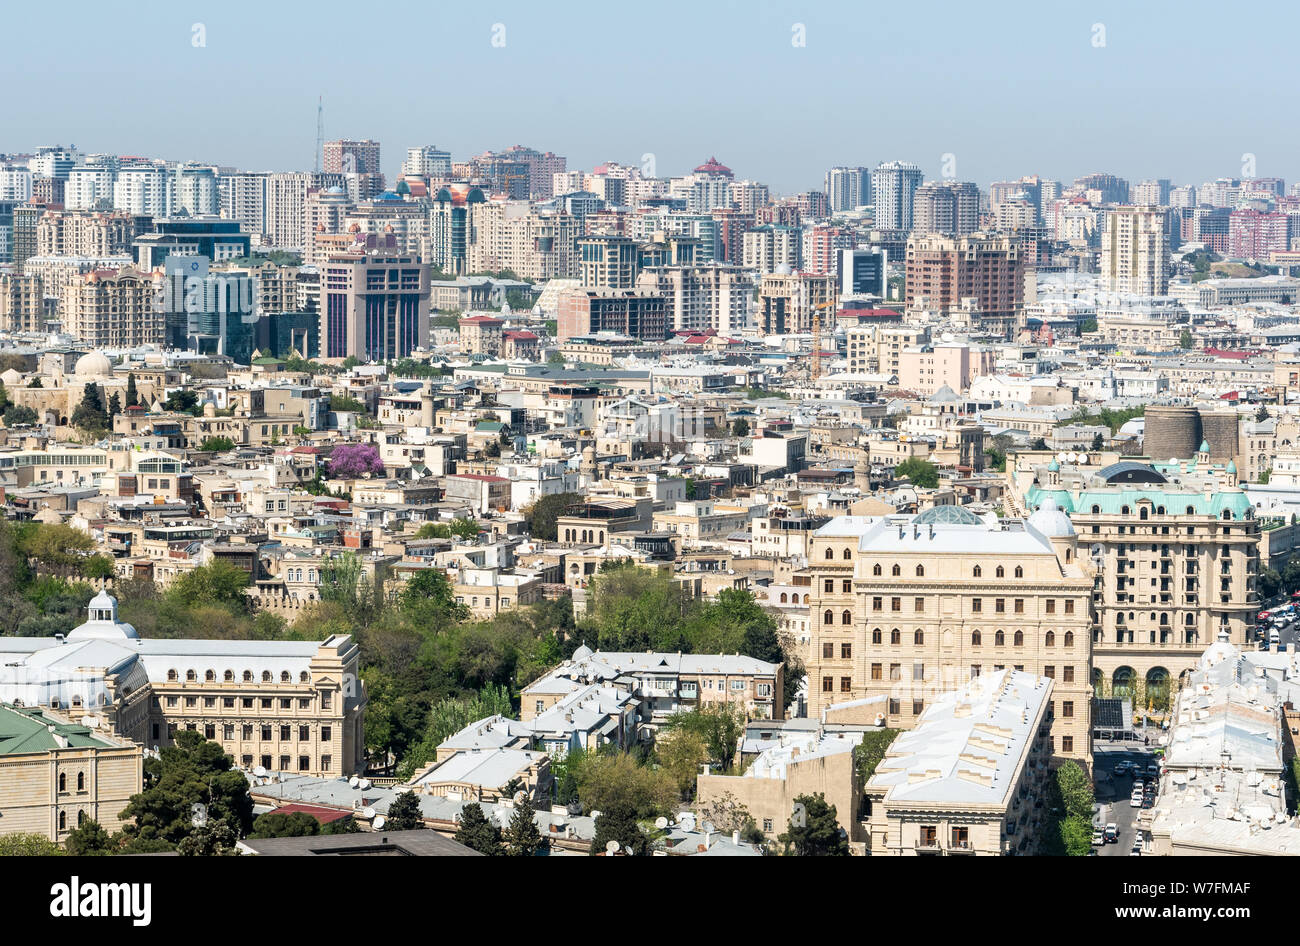 baku-azerbaijan-may-2-2019-view-over-old-town-quarter-of-baku-the-capital-of-azerbaijanwith-modern-buildings-around-it-W7FMAF.jpg